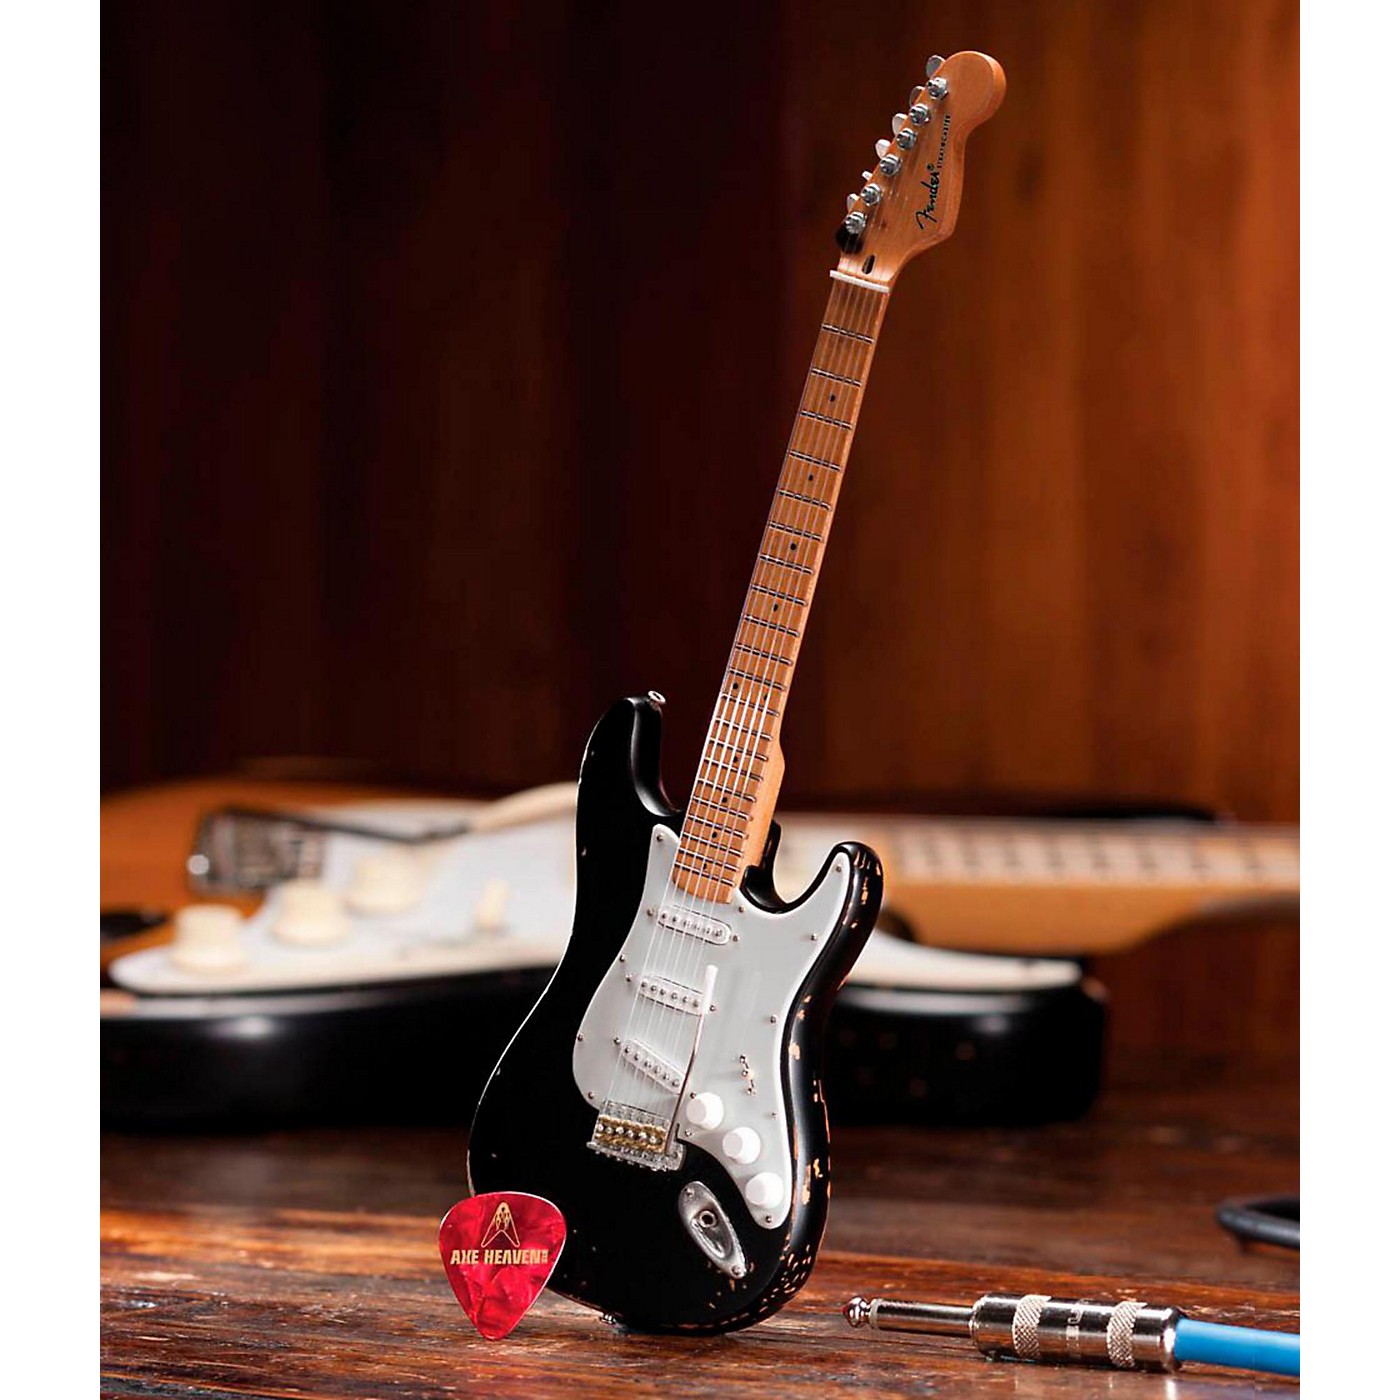 Axe Heaven Fender Stratocaster Black Vintage Distressed Miniature Guitar Replica Collectible thumbnail